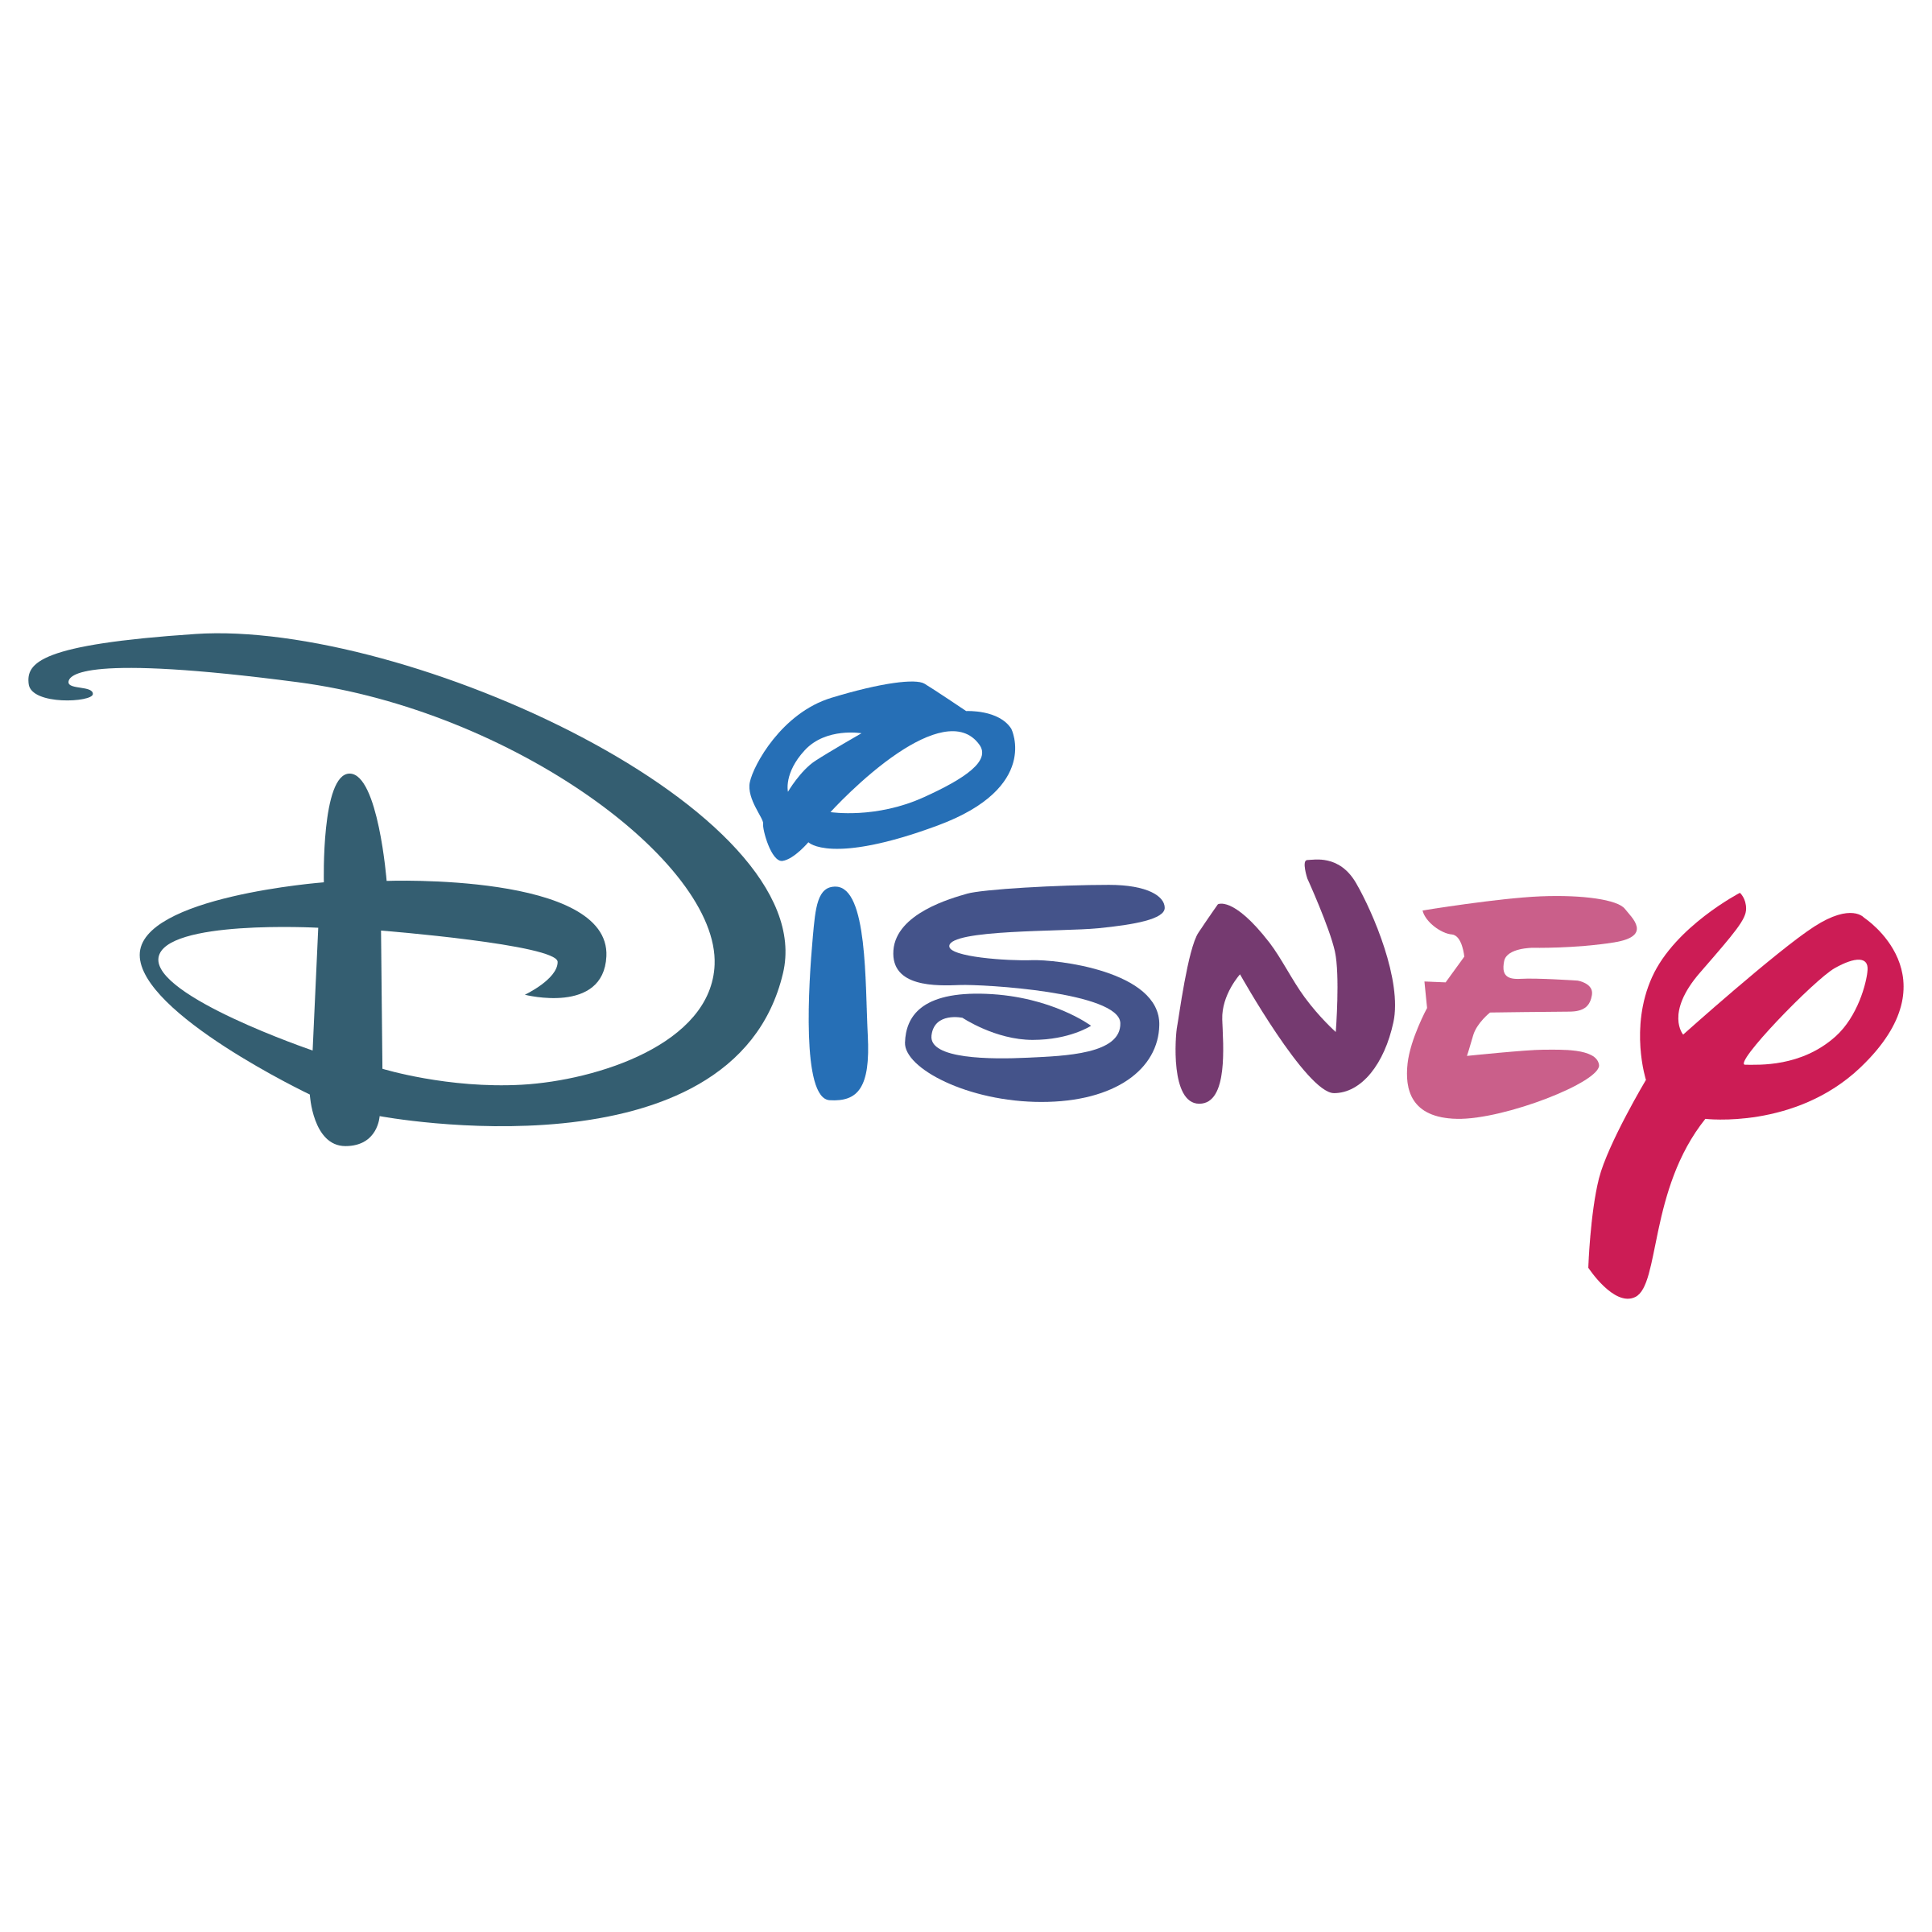 Disnney Logo - Disney Logo PNG Transparent & SVG Vector - Freebie Supply